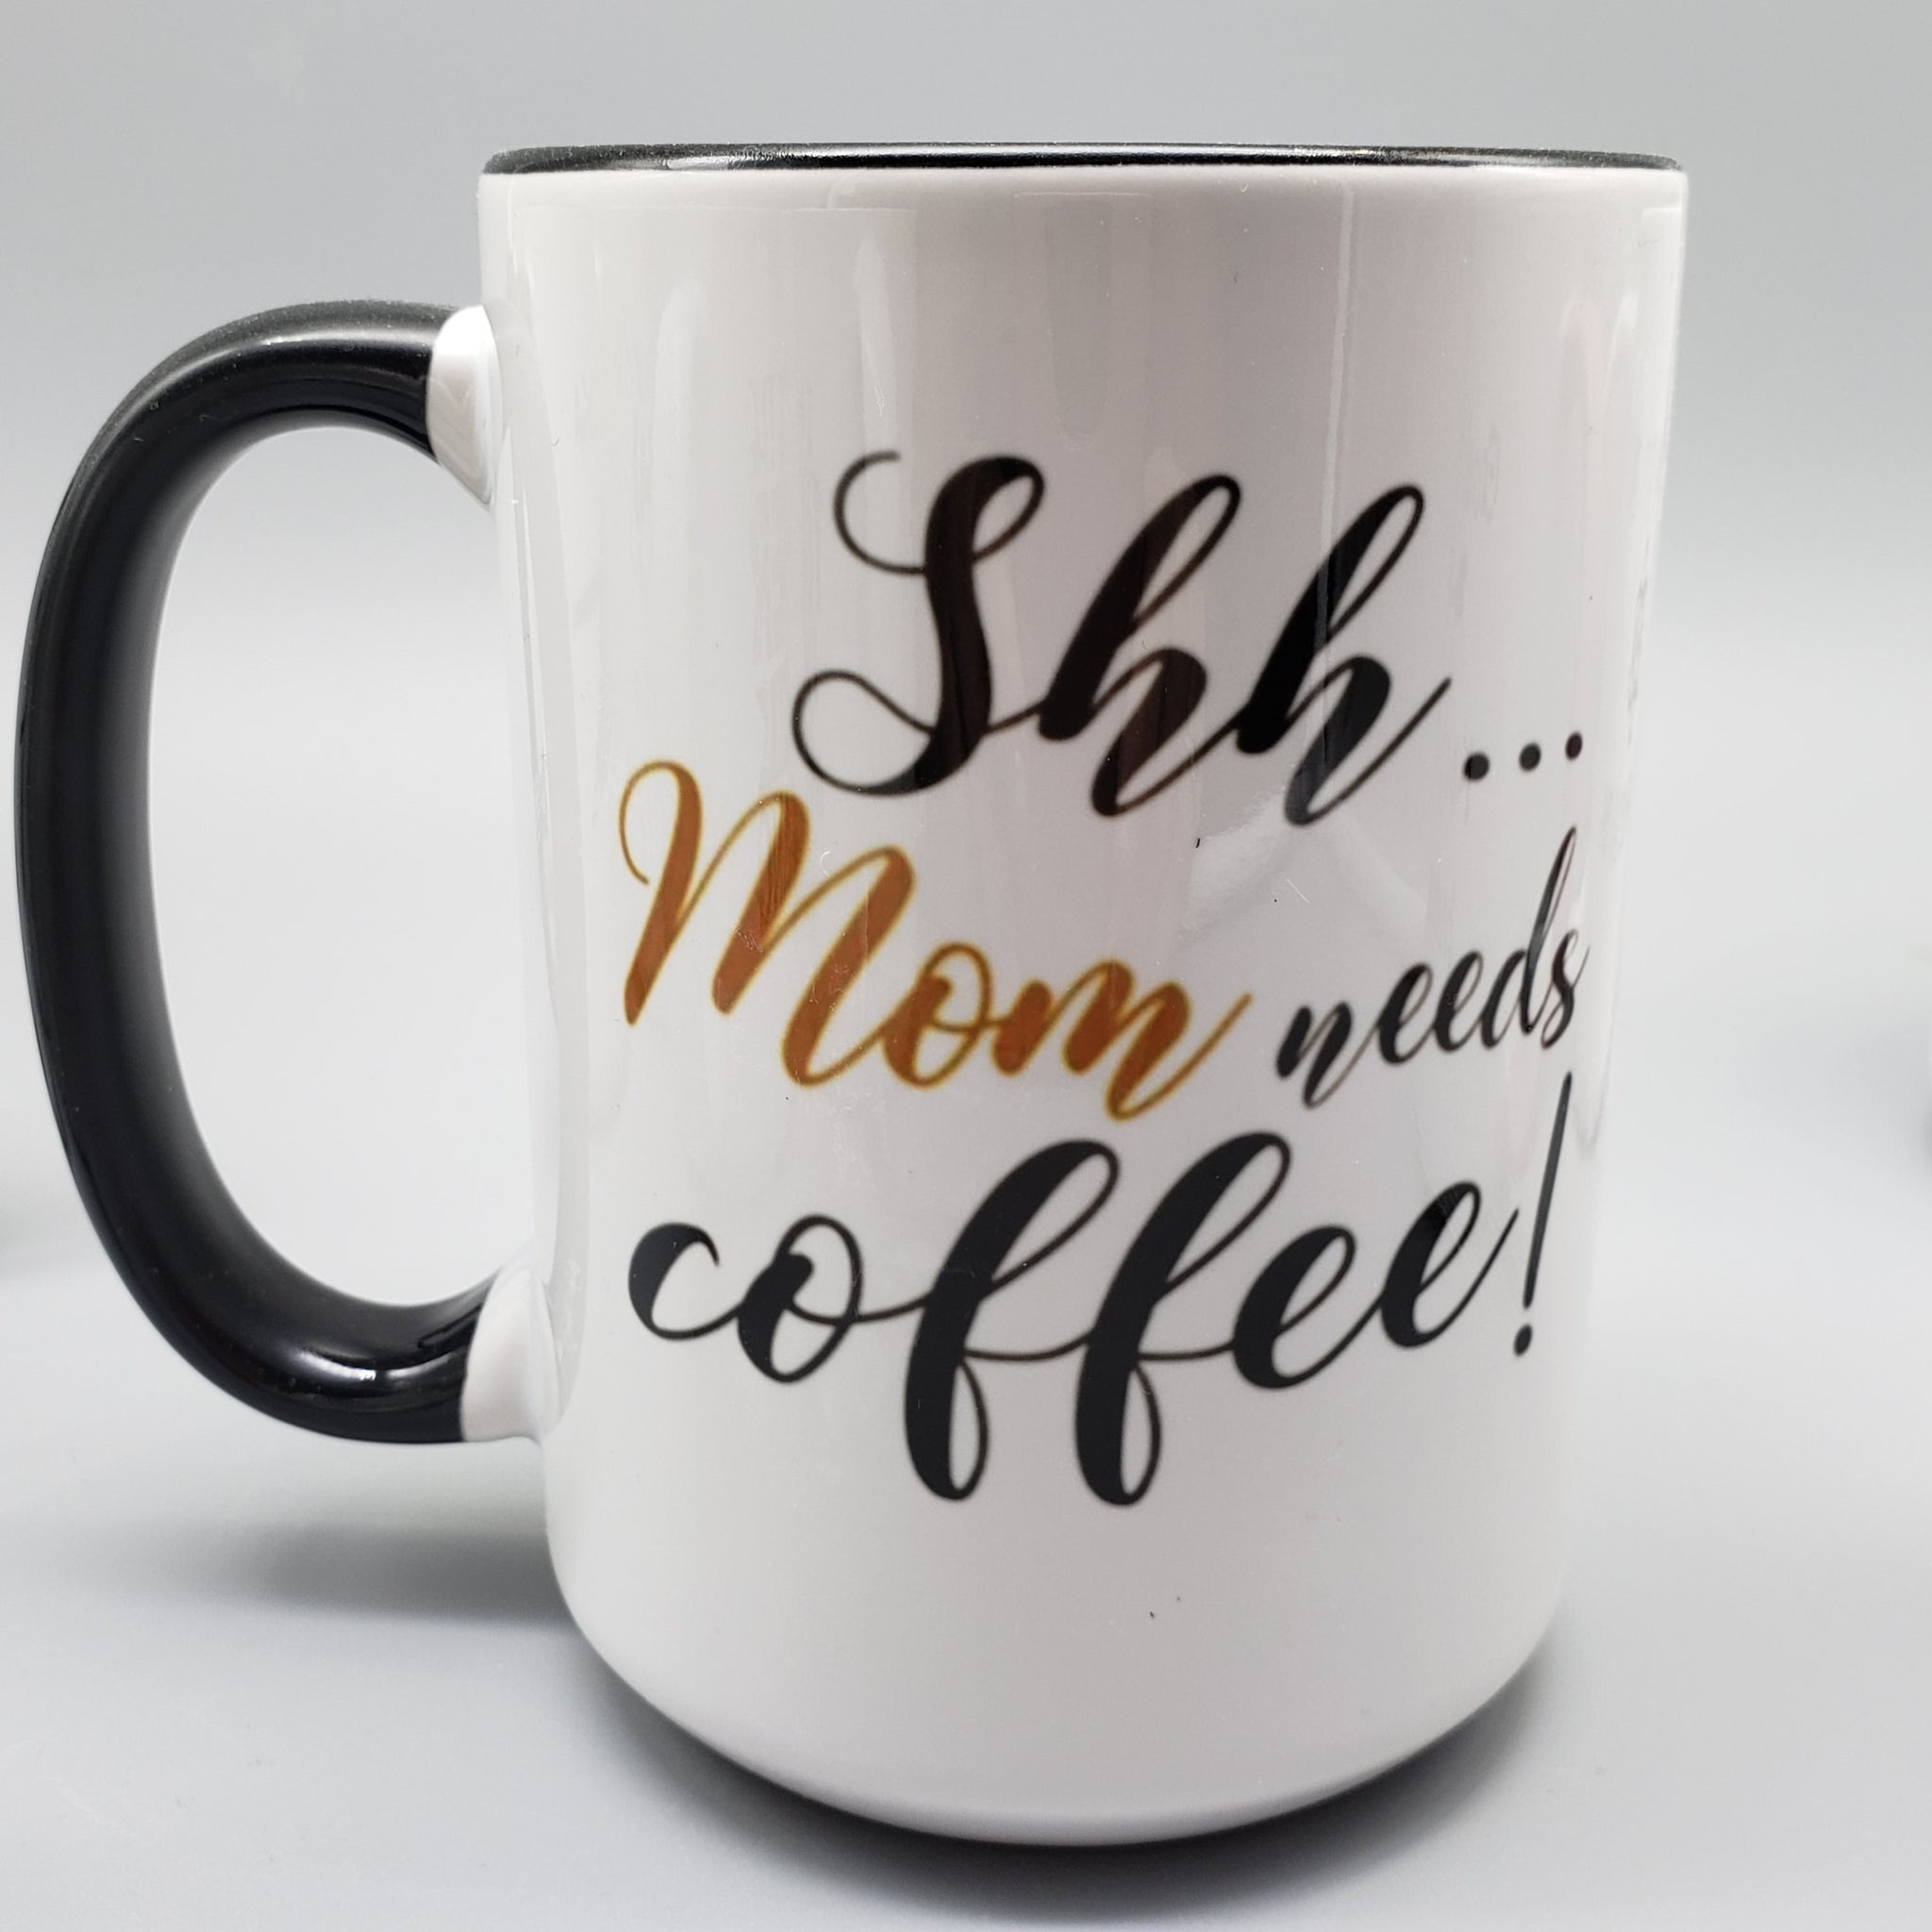 Shhhh...mom needs coffee